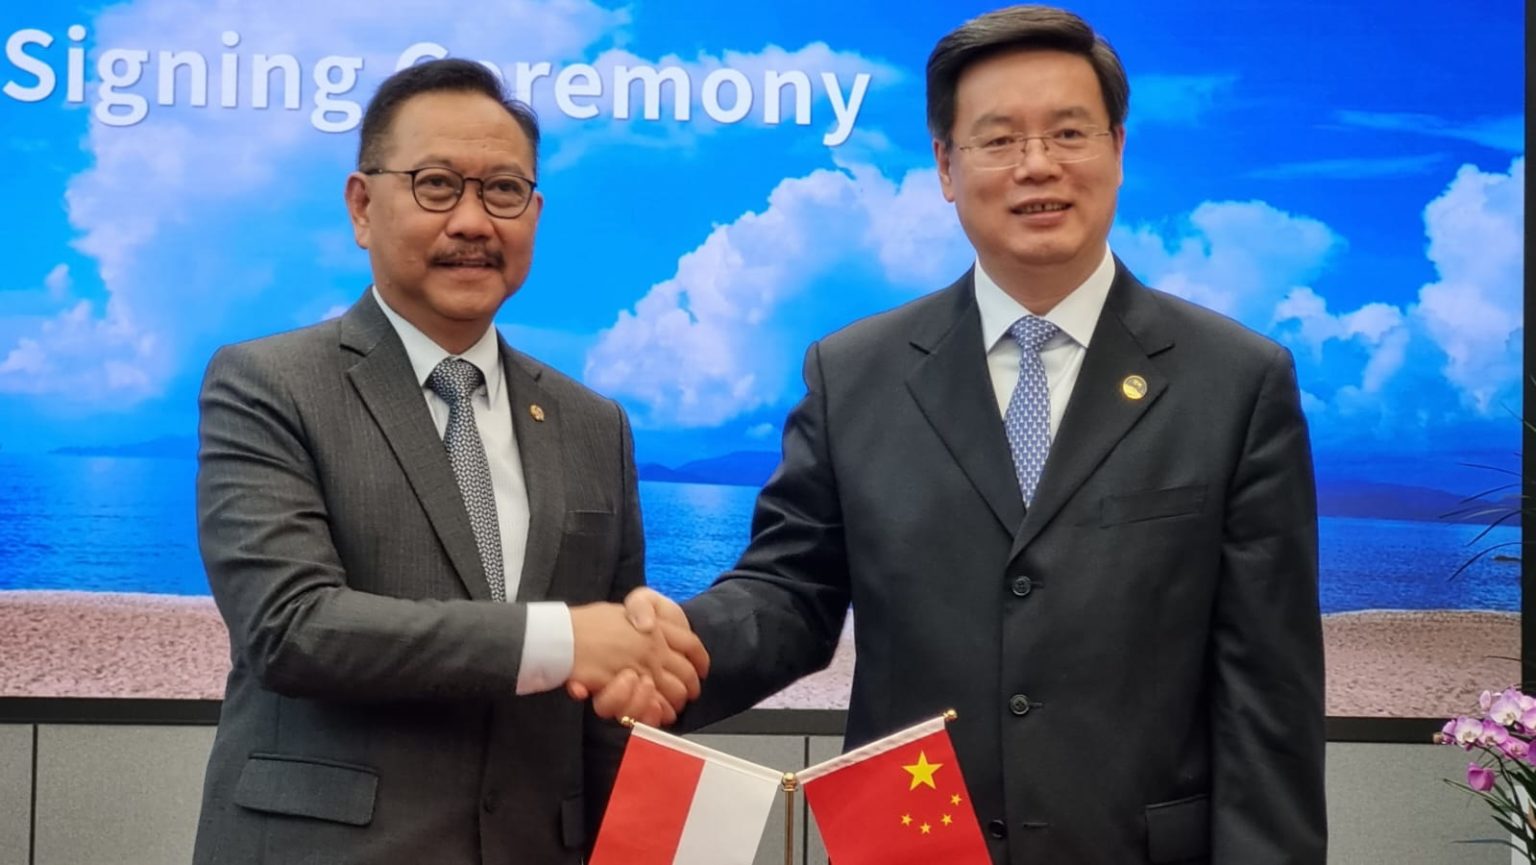 Kepala Otorita Ibu Kota Nusantara (OIKN) Bambang Susantono bertemu dengan Wali Kota Shenzhen Qin Weizhong untuk menjajaki kerja sama konkret yang disepakati antara Pemerintah Indonesia dan Republik Rakyat Tiongkok (RRT).